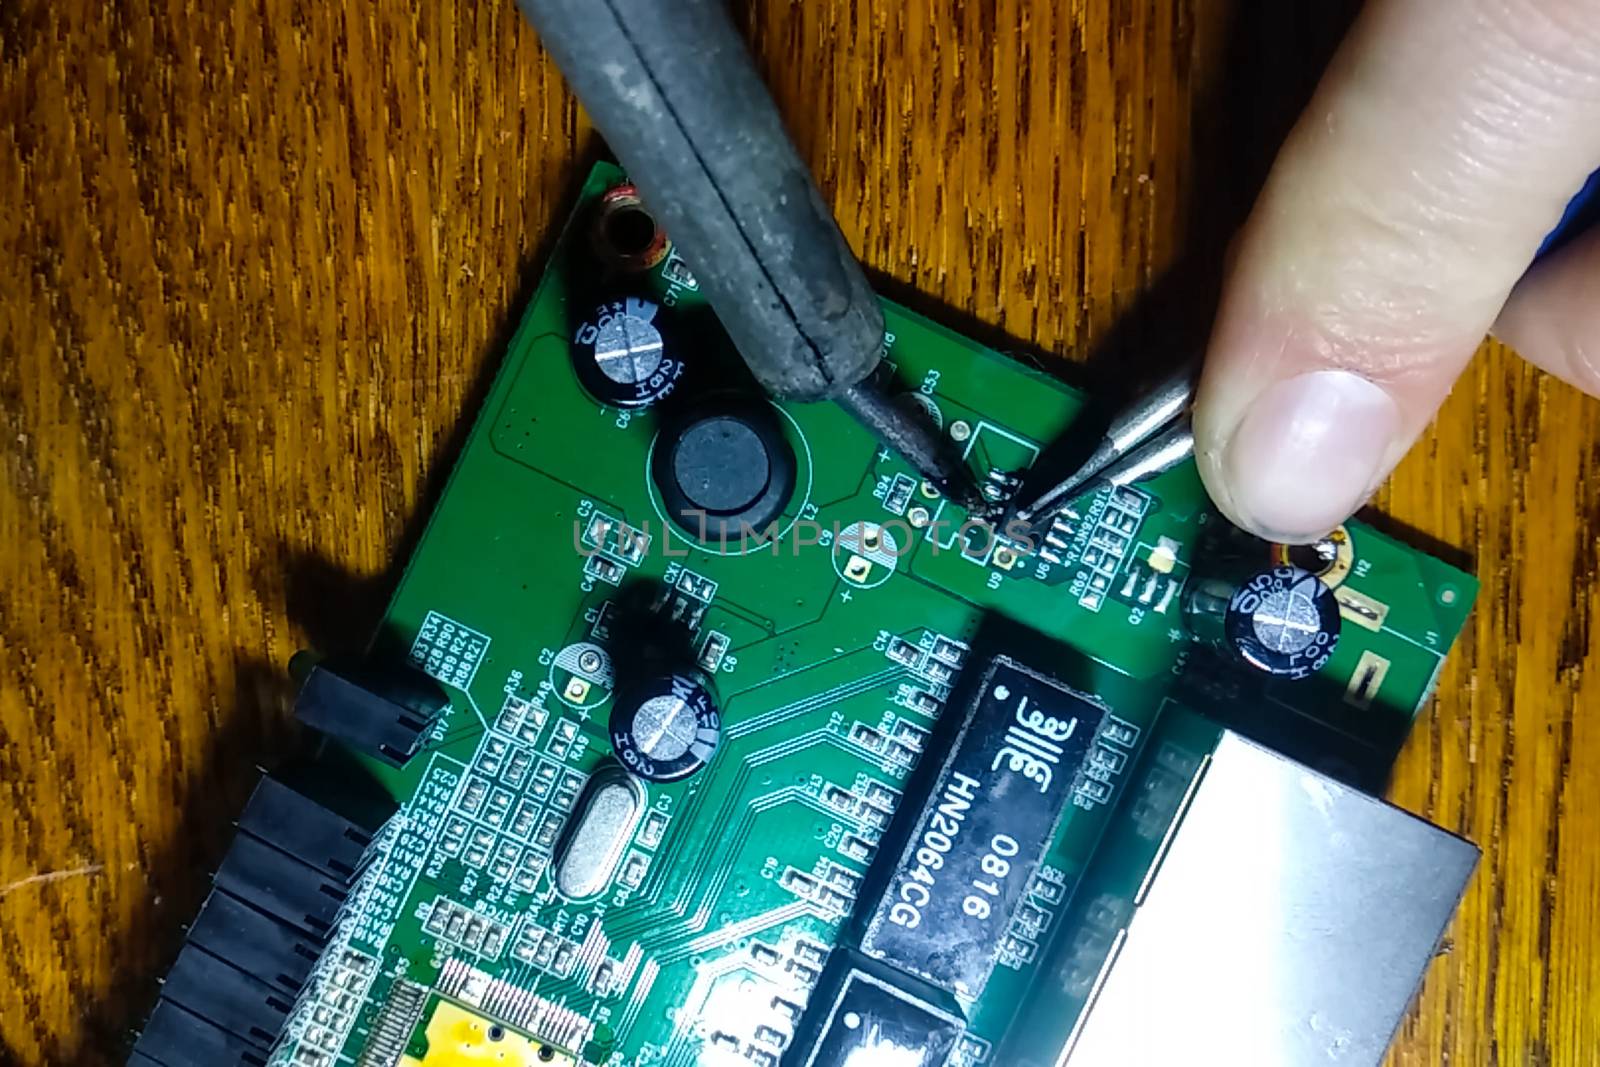 Repair of electronics and computer equipment. Multimeter